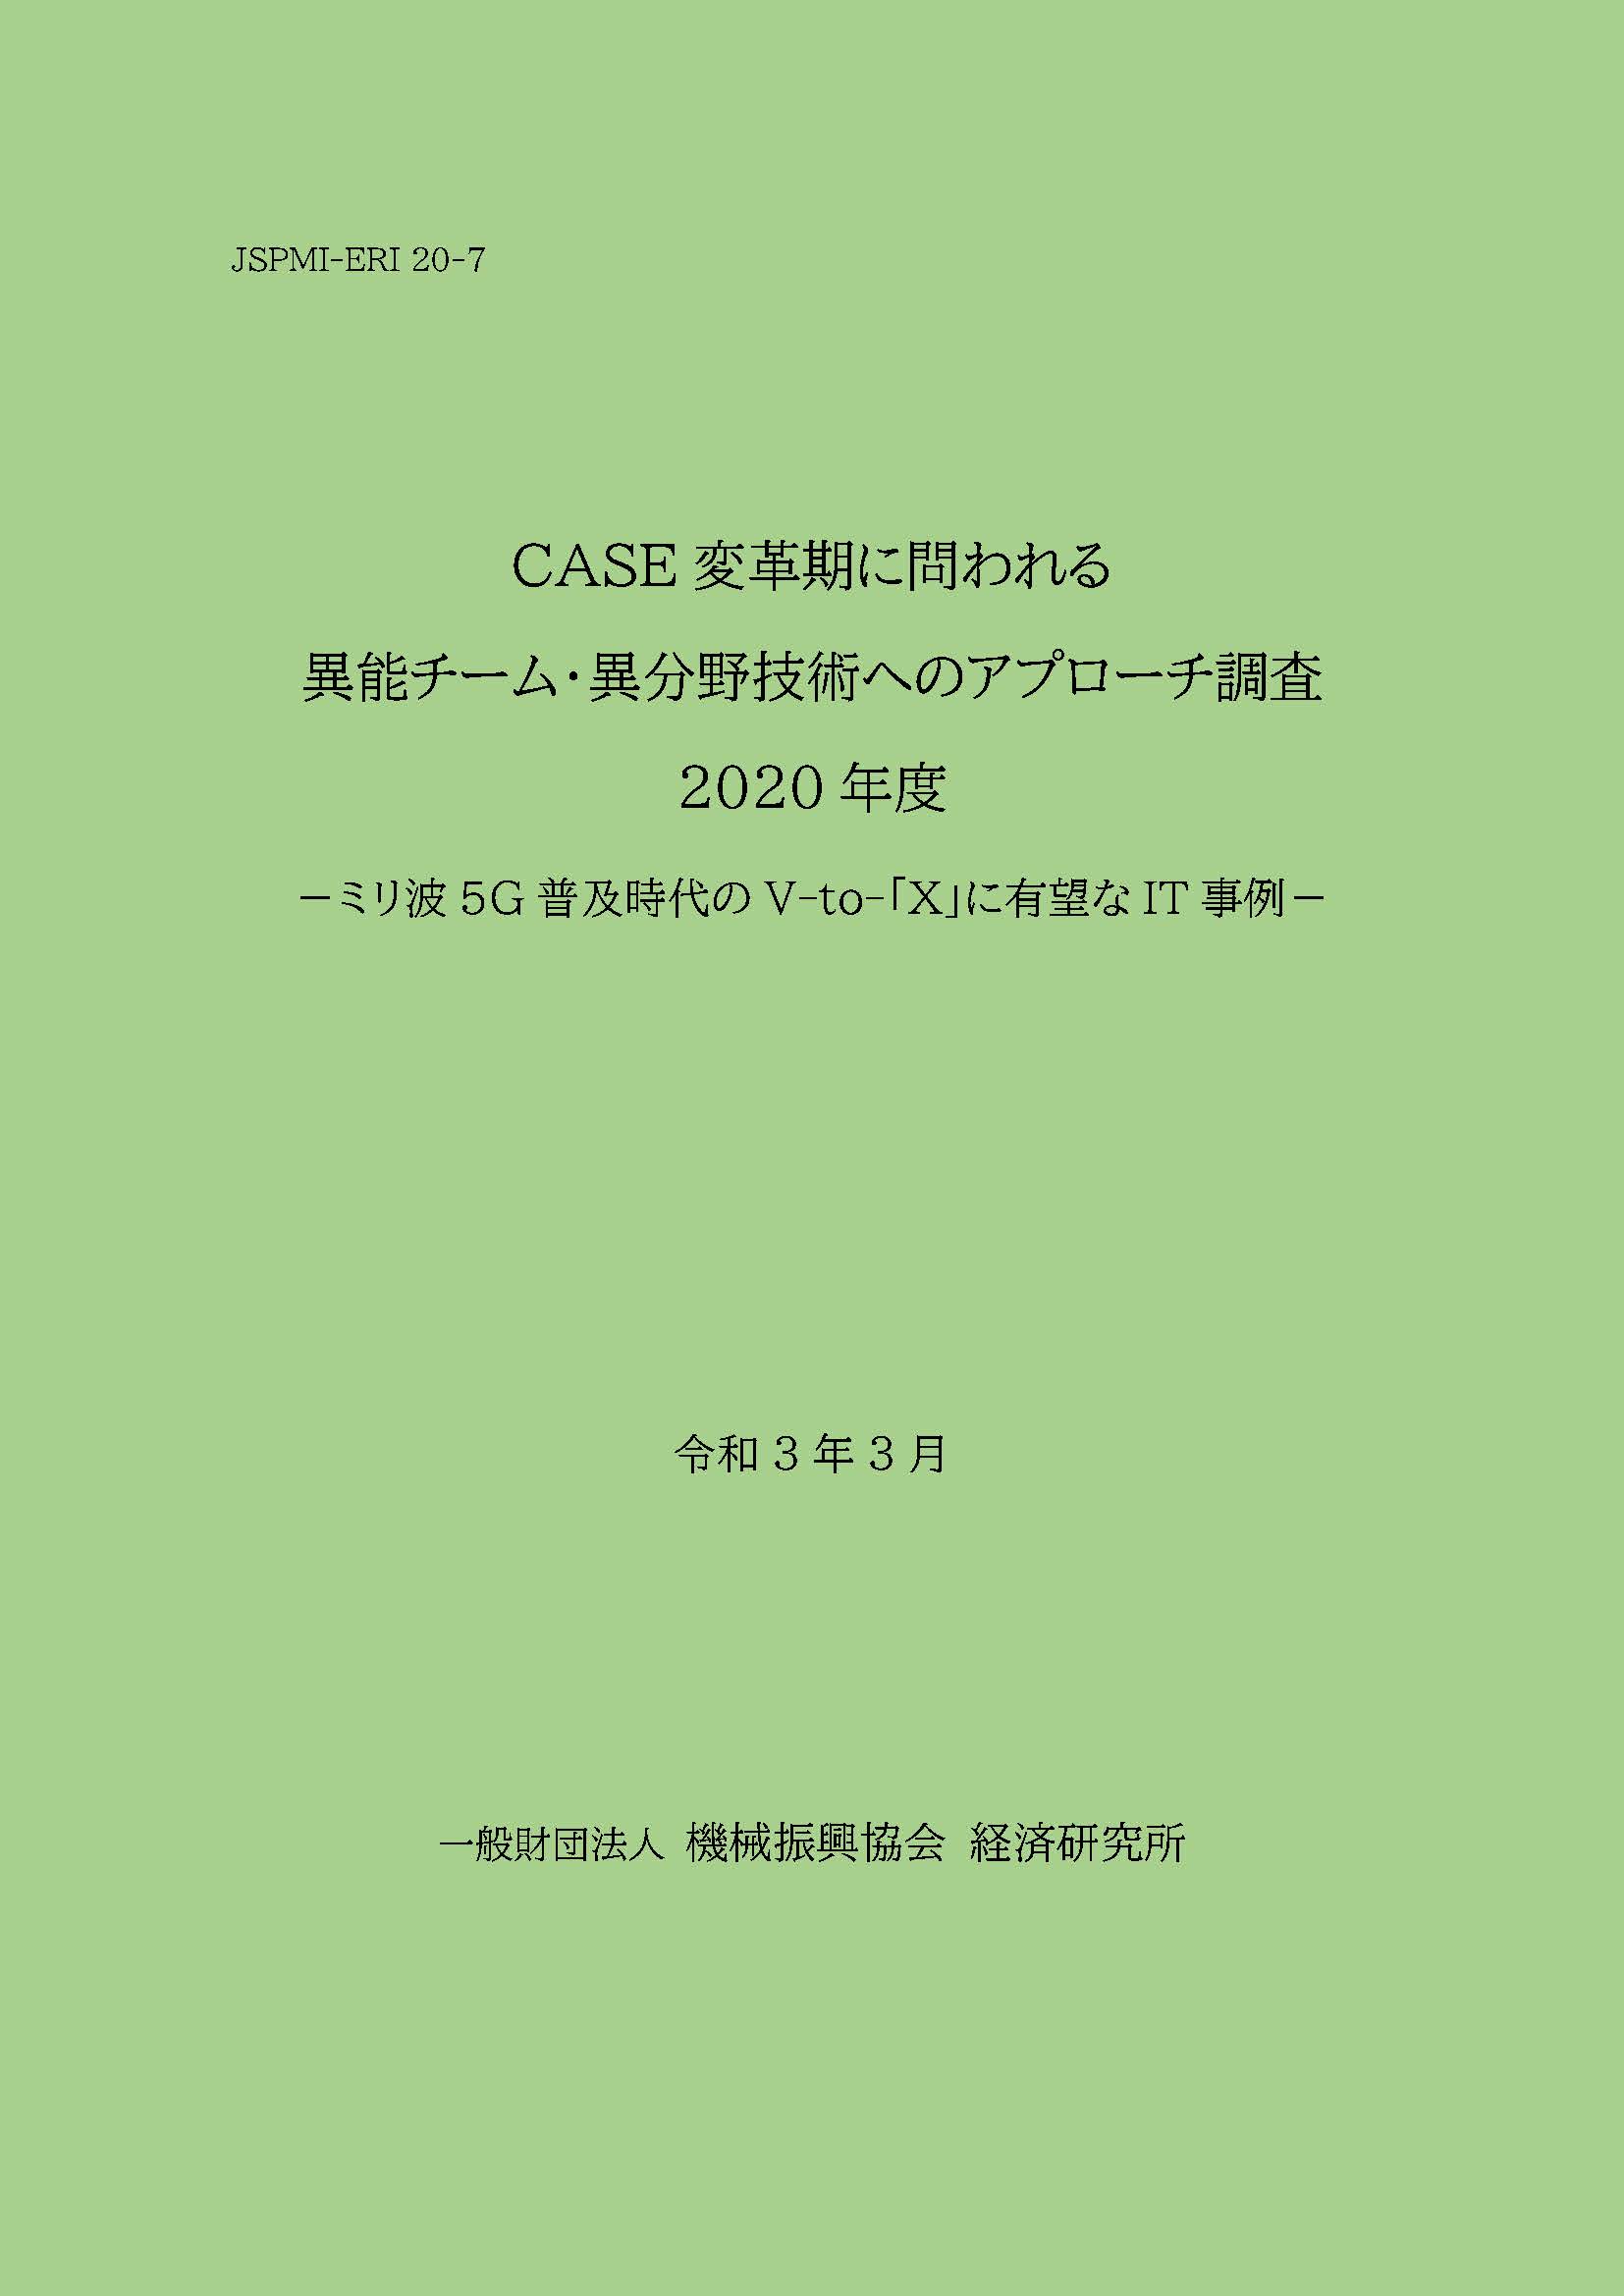 20_7case 表紙c.jpg